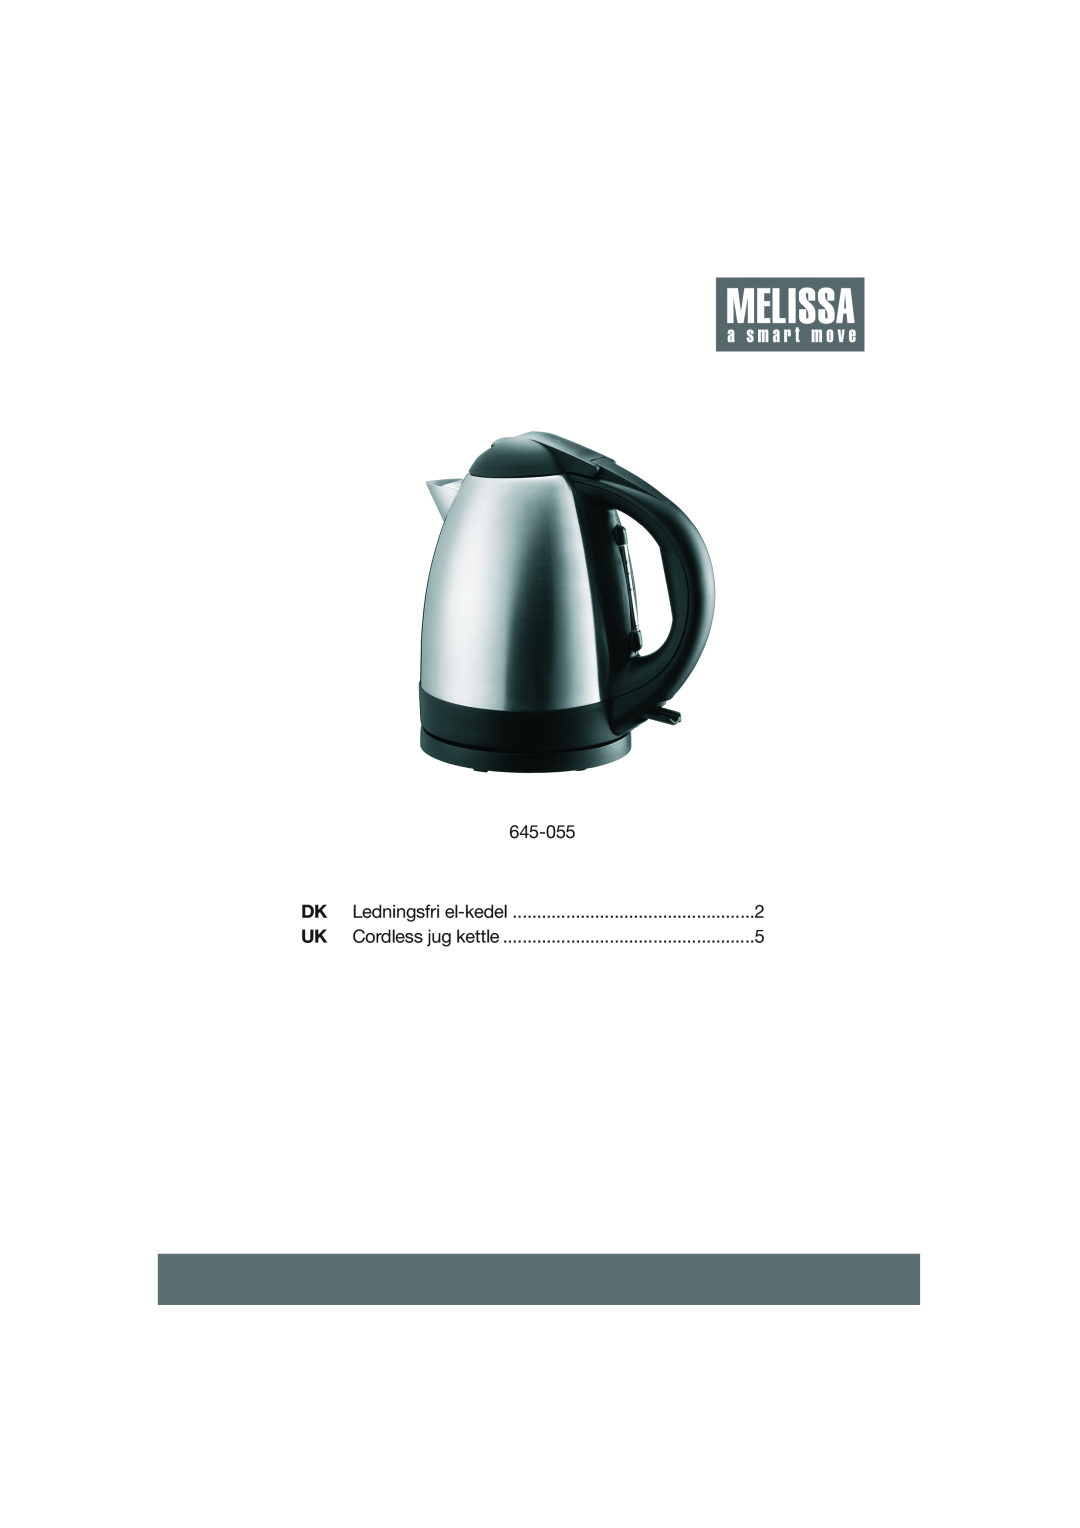 Melissa 645-055 manual Ledningsfri el-kedel, Cordless jug kettle 